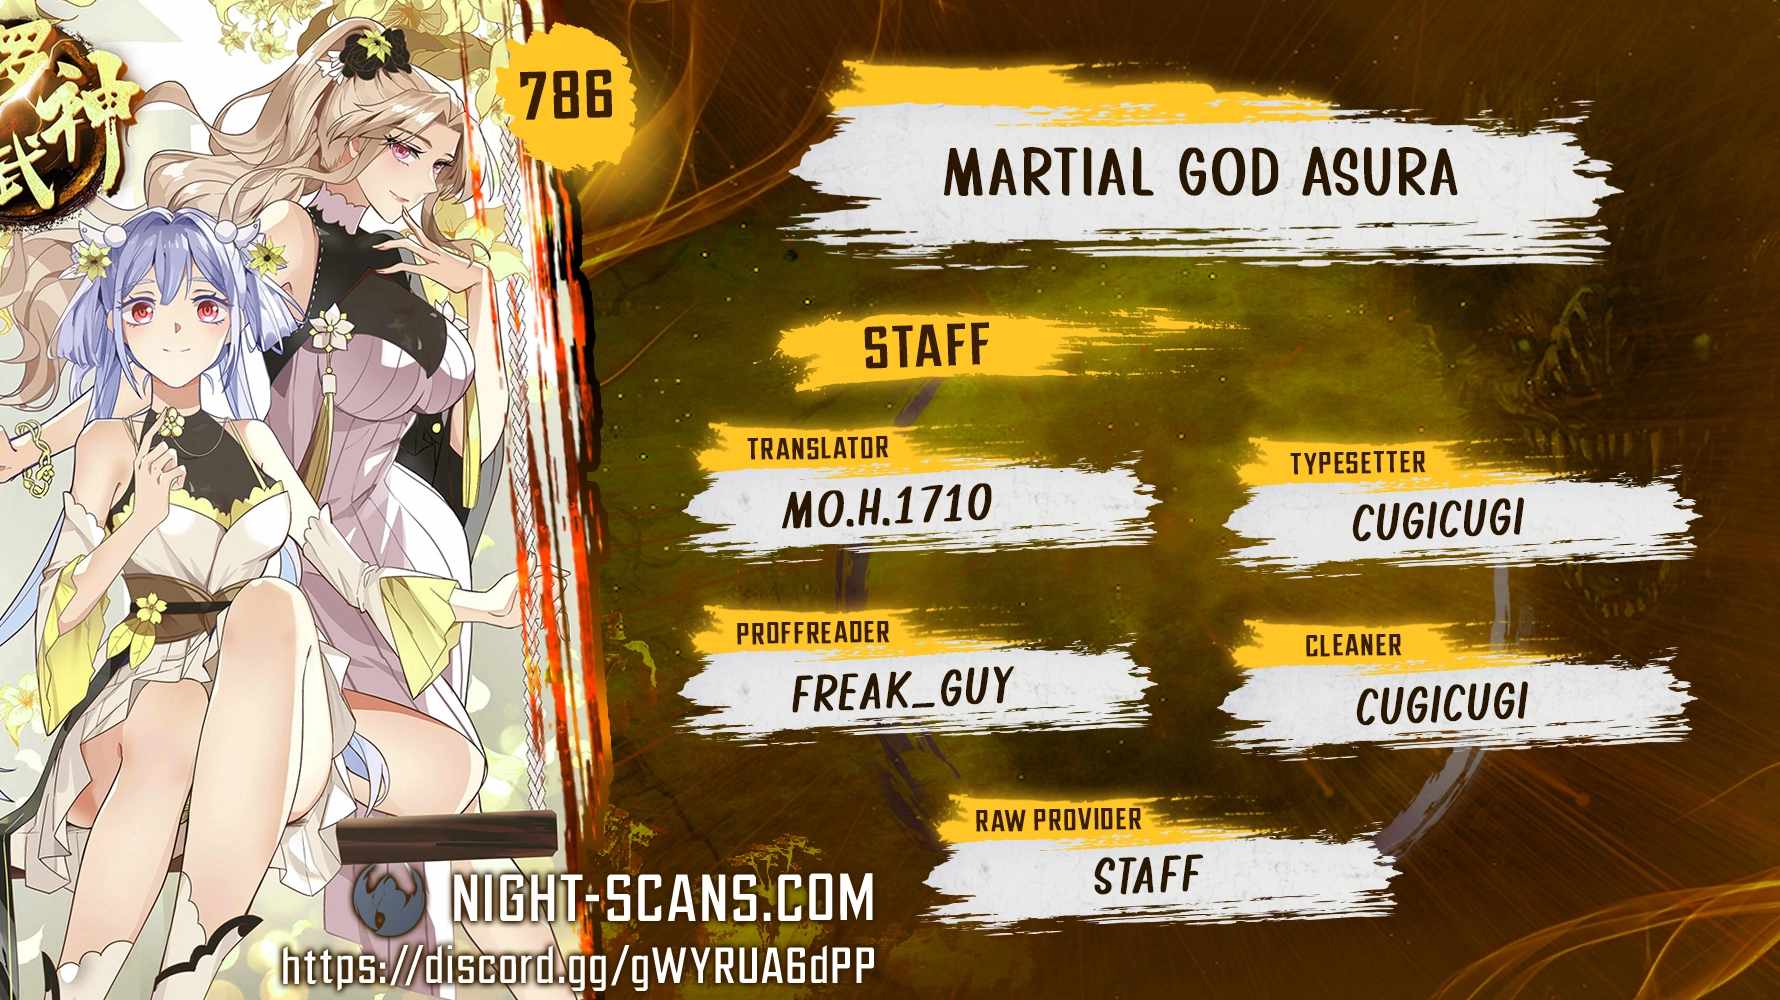 Martial God Asura Chapter 786